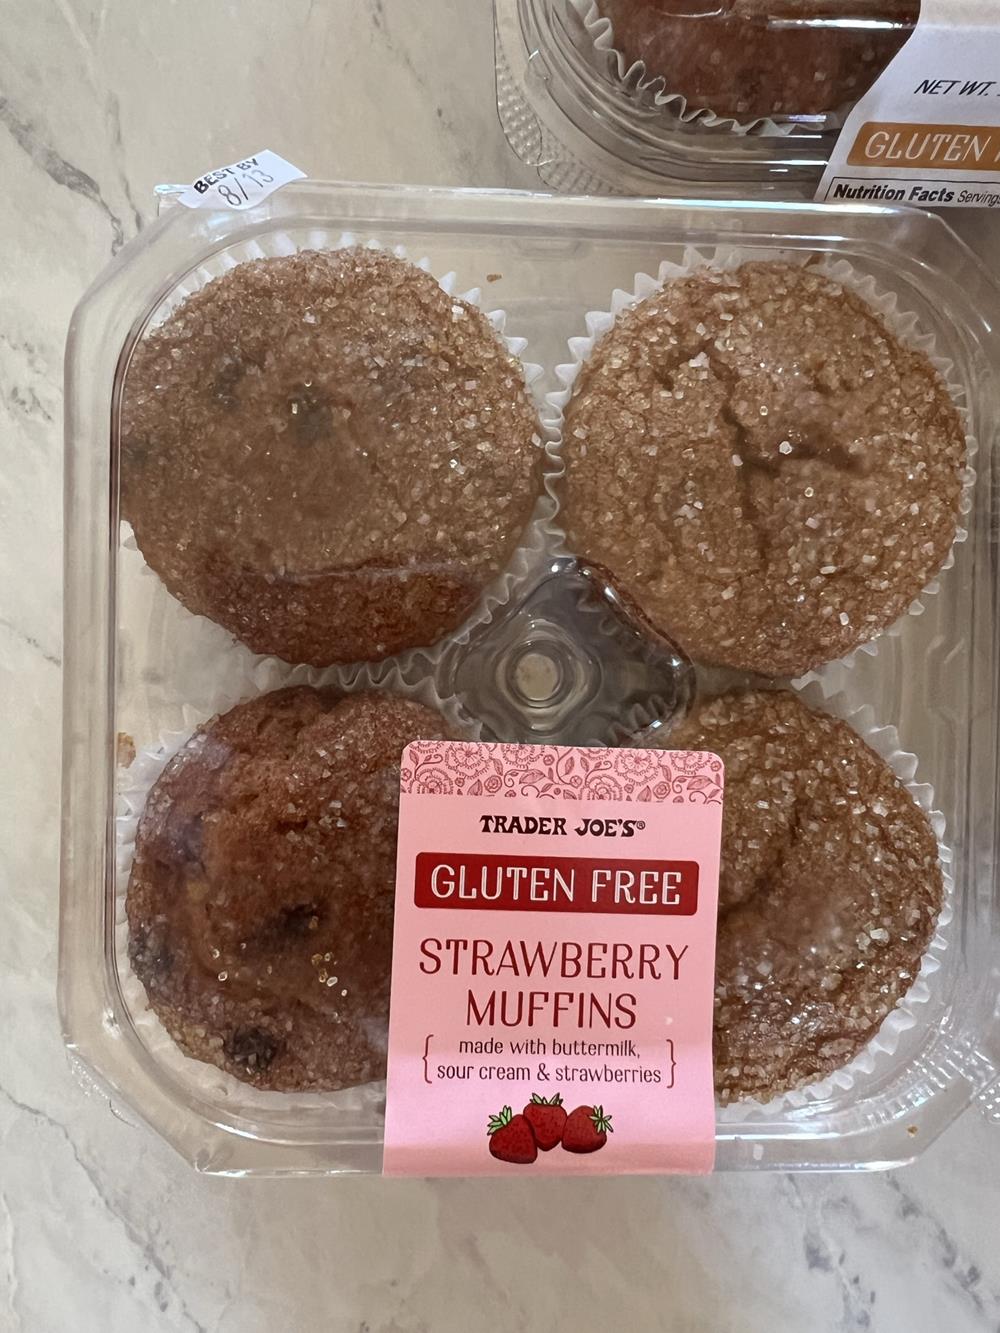 Trader Joe's Gluten Free Strawberry Muffins in package